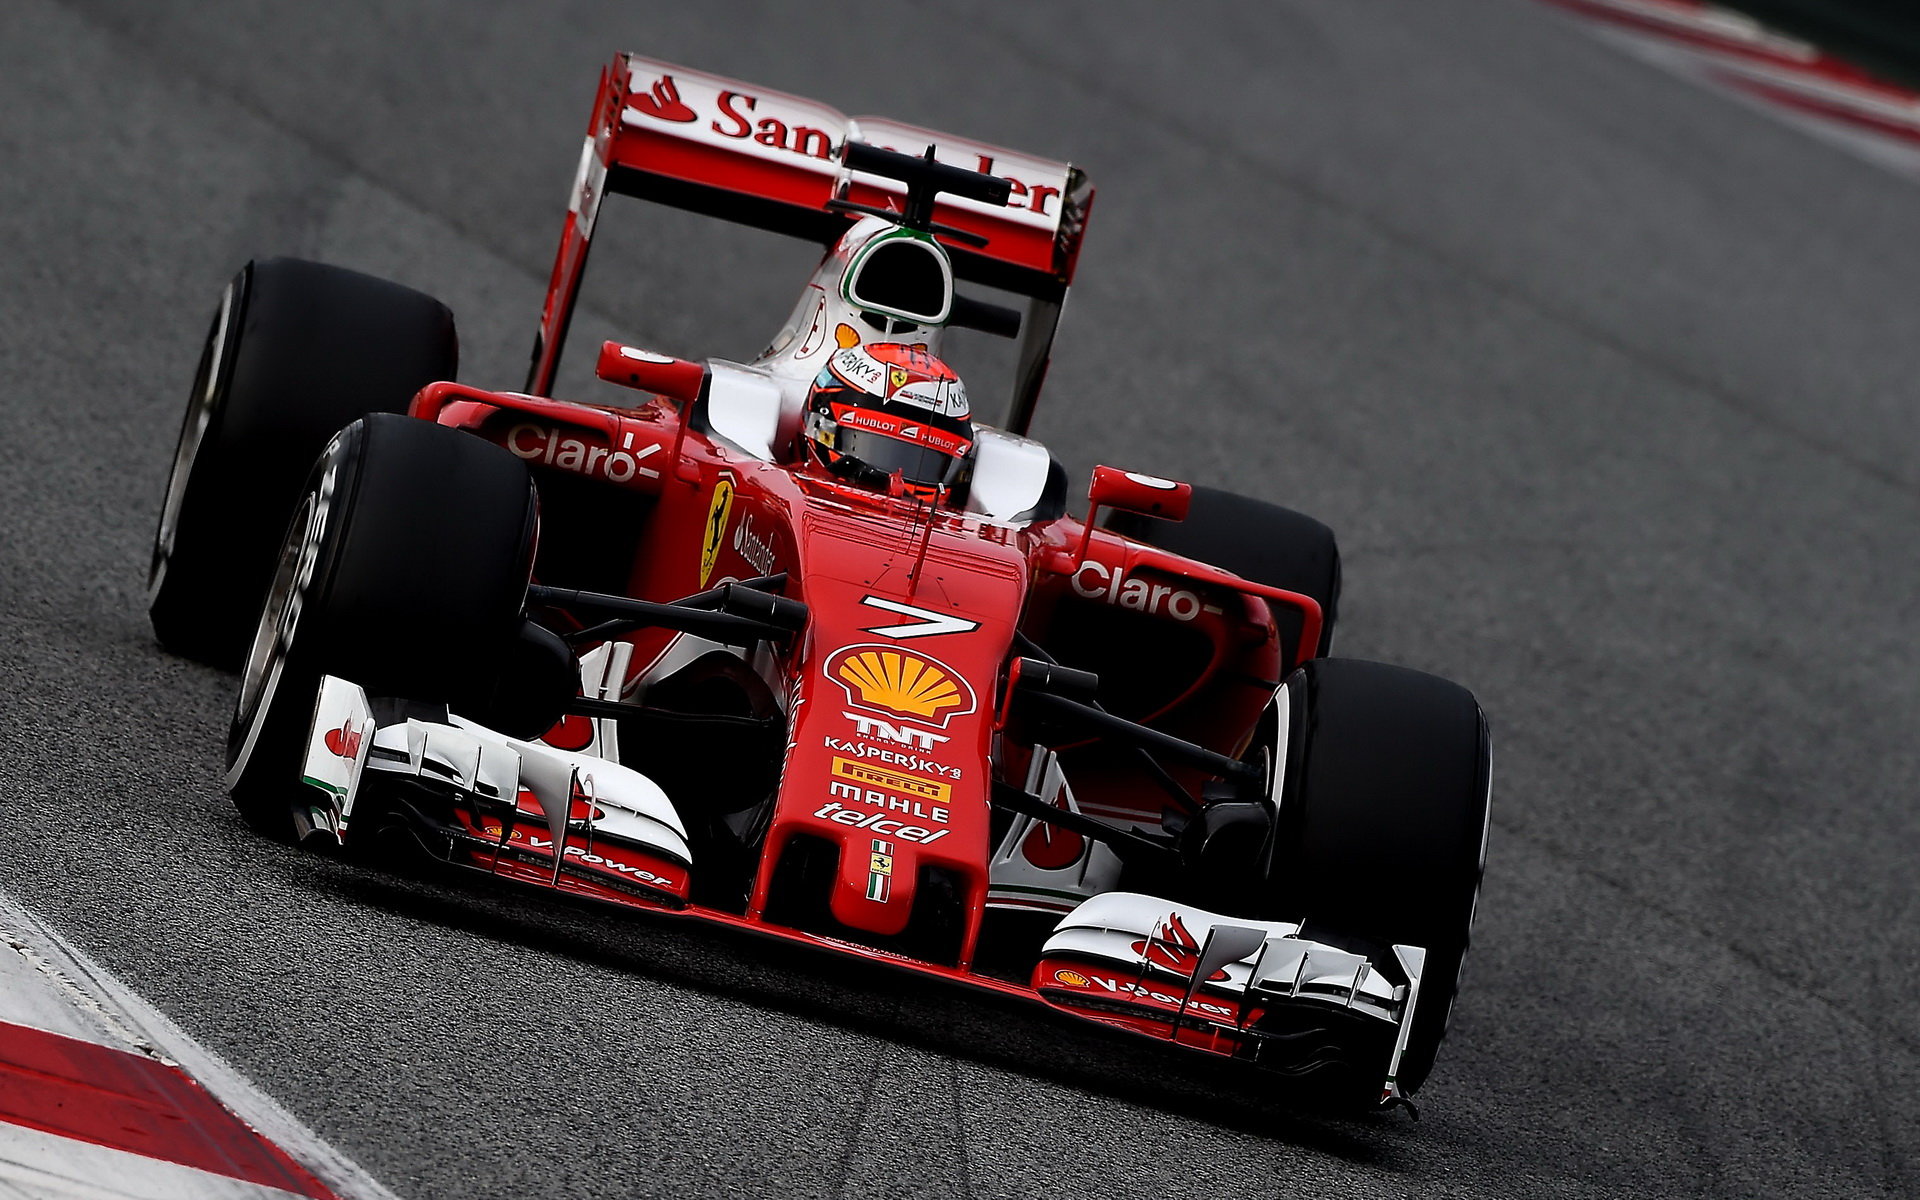 Kimi Räikkönen s novým vozem Ferrari SF16-H